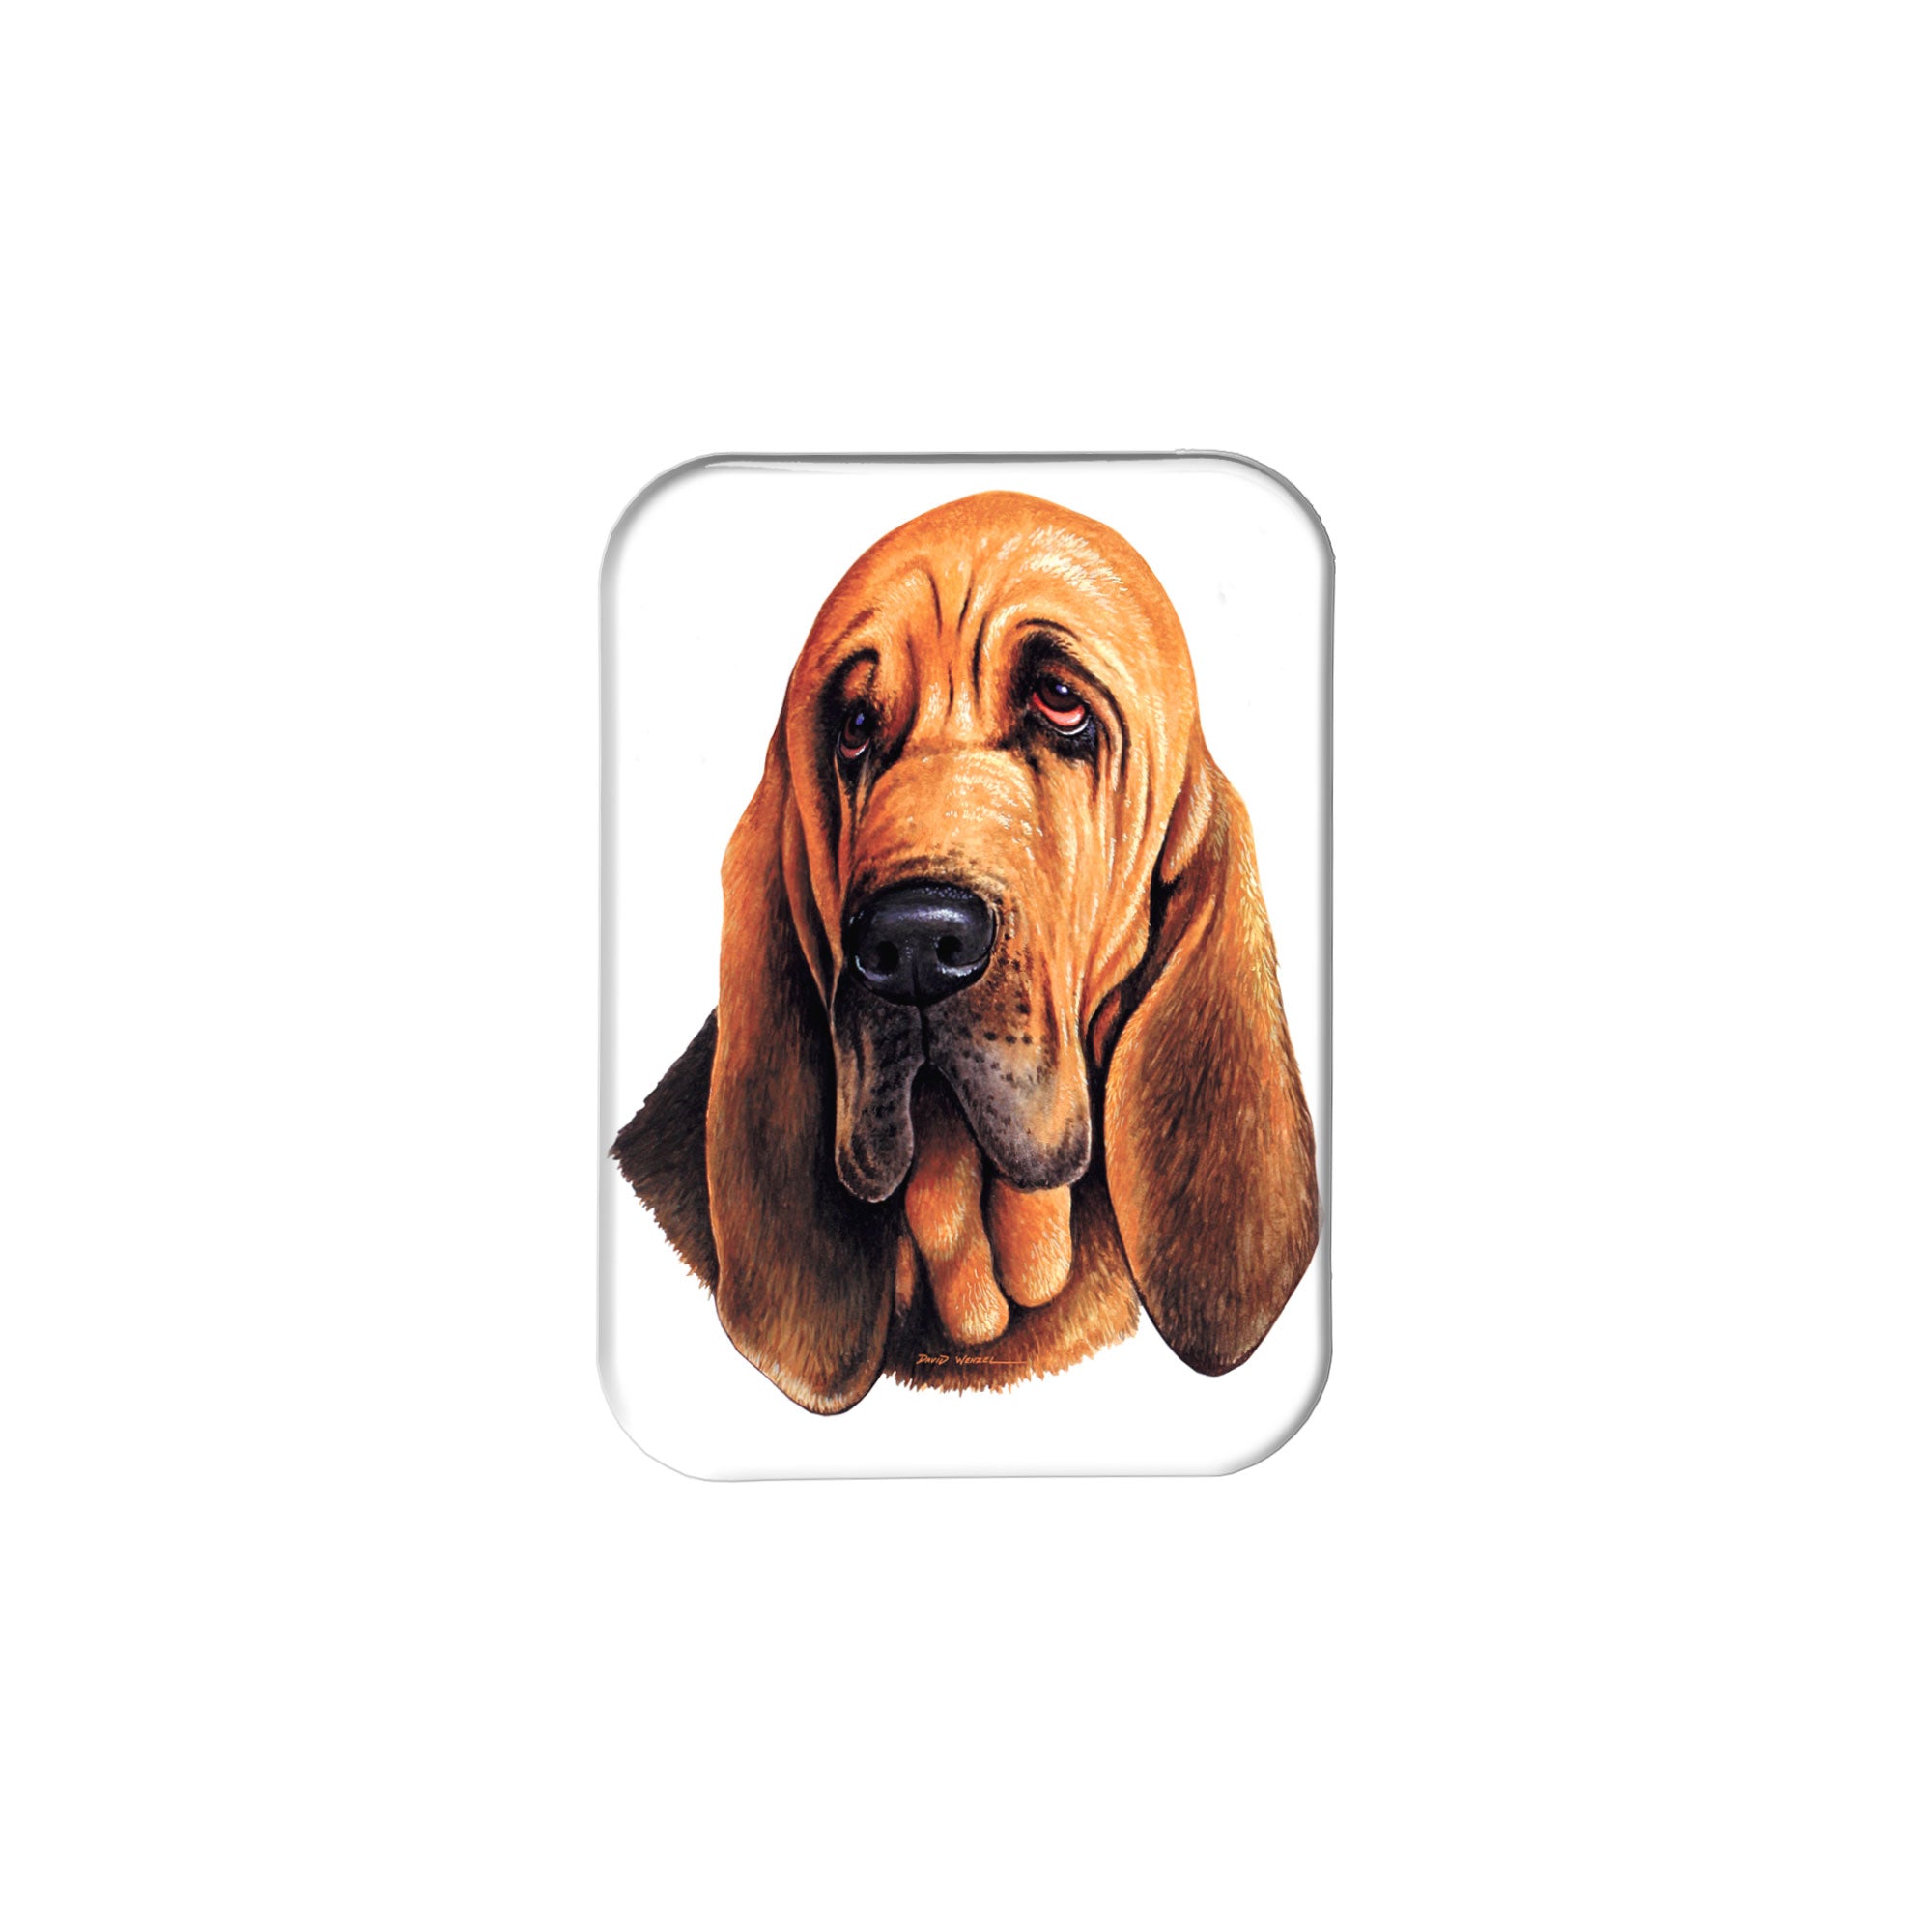 "Bloodhound" - 2.5" X 3.5" Rectangle Fridge Magnets